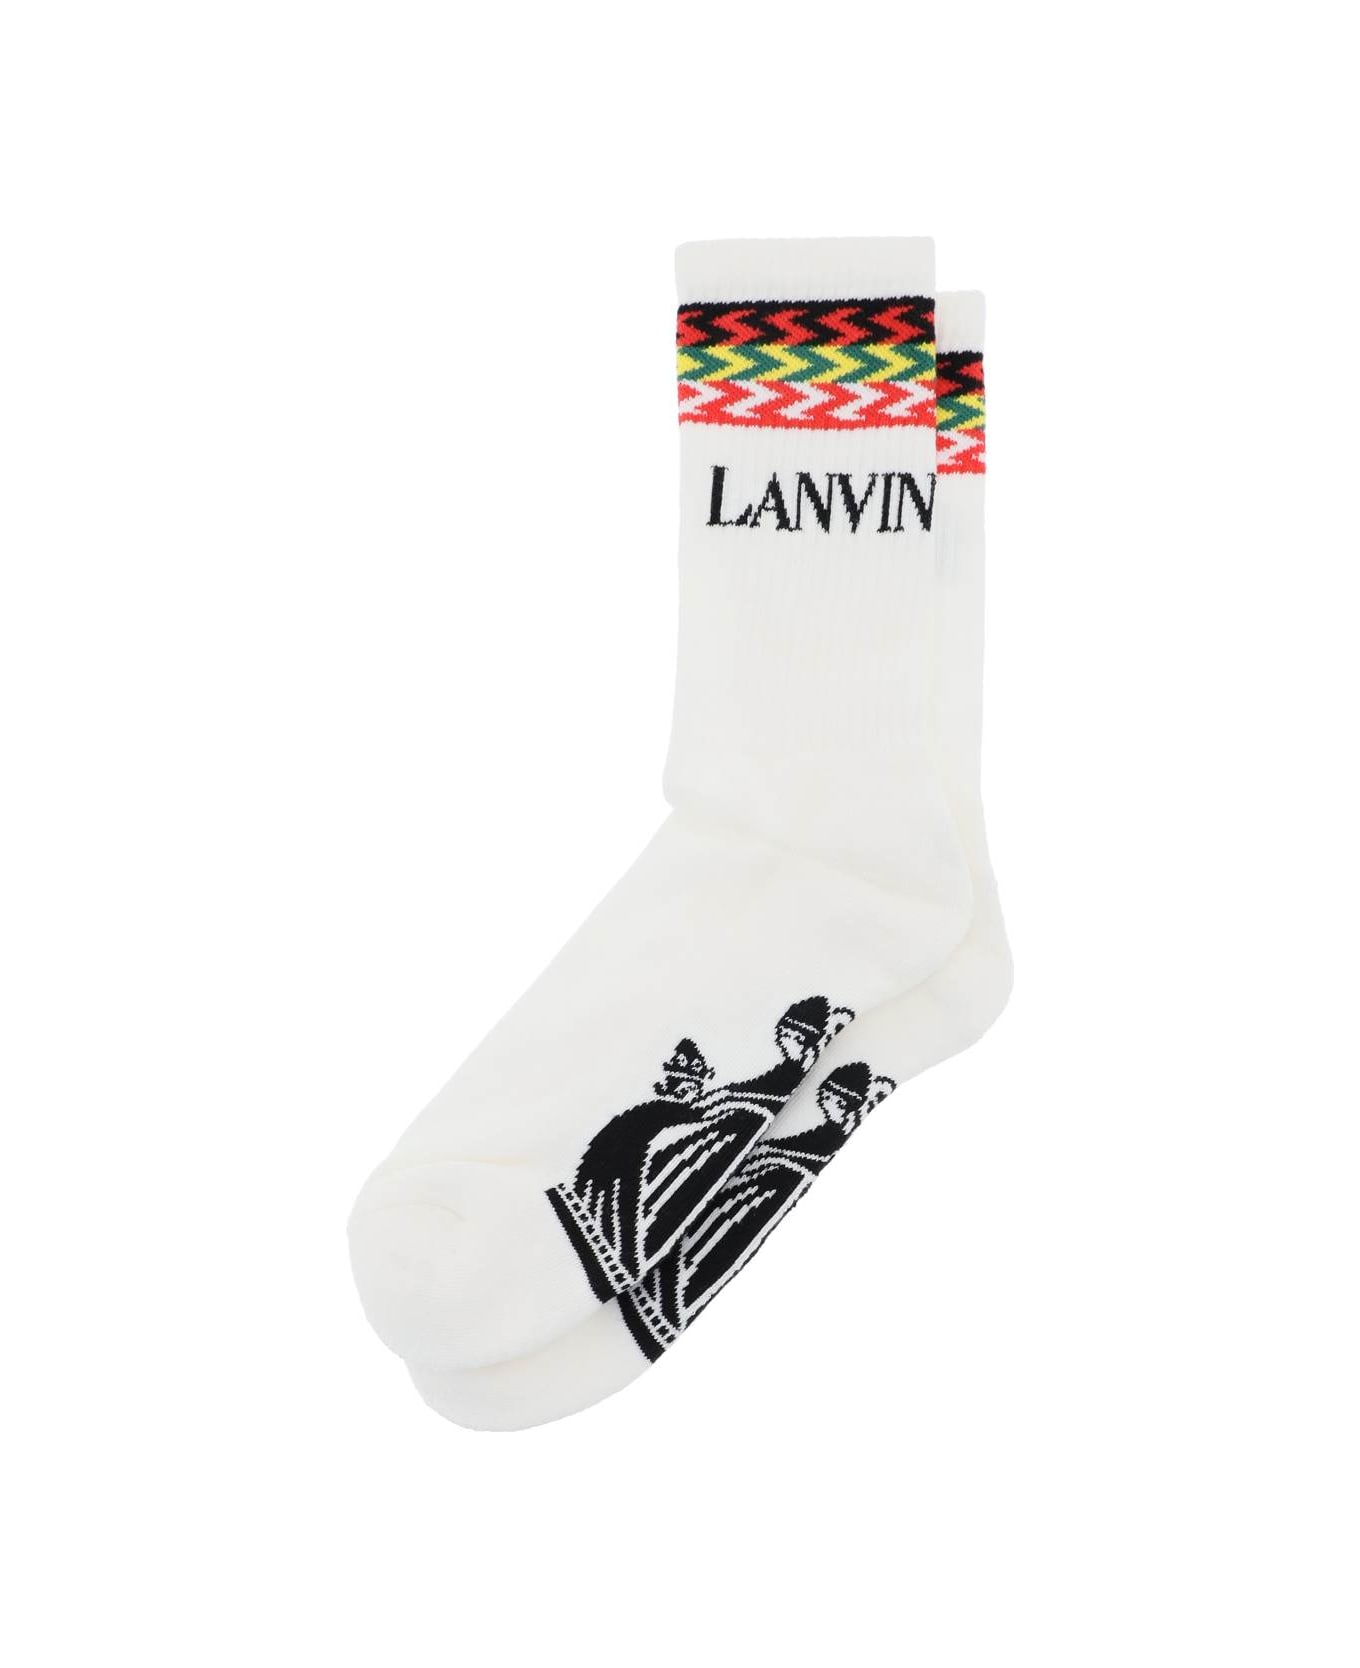 Lanvin Kerb Socks - WHITE MULTICOLOR (White)